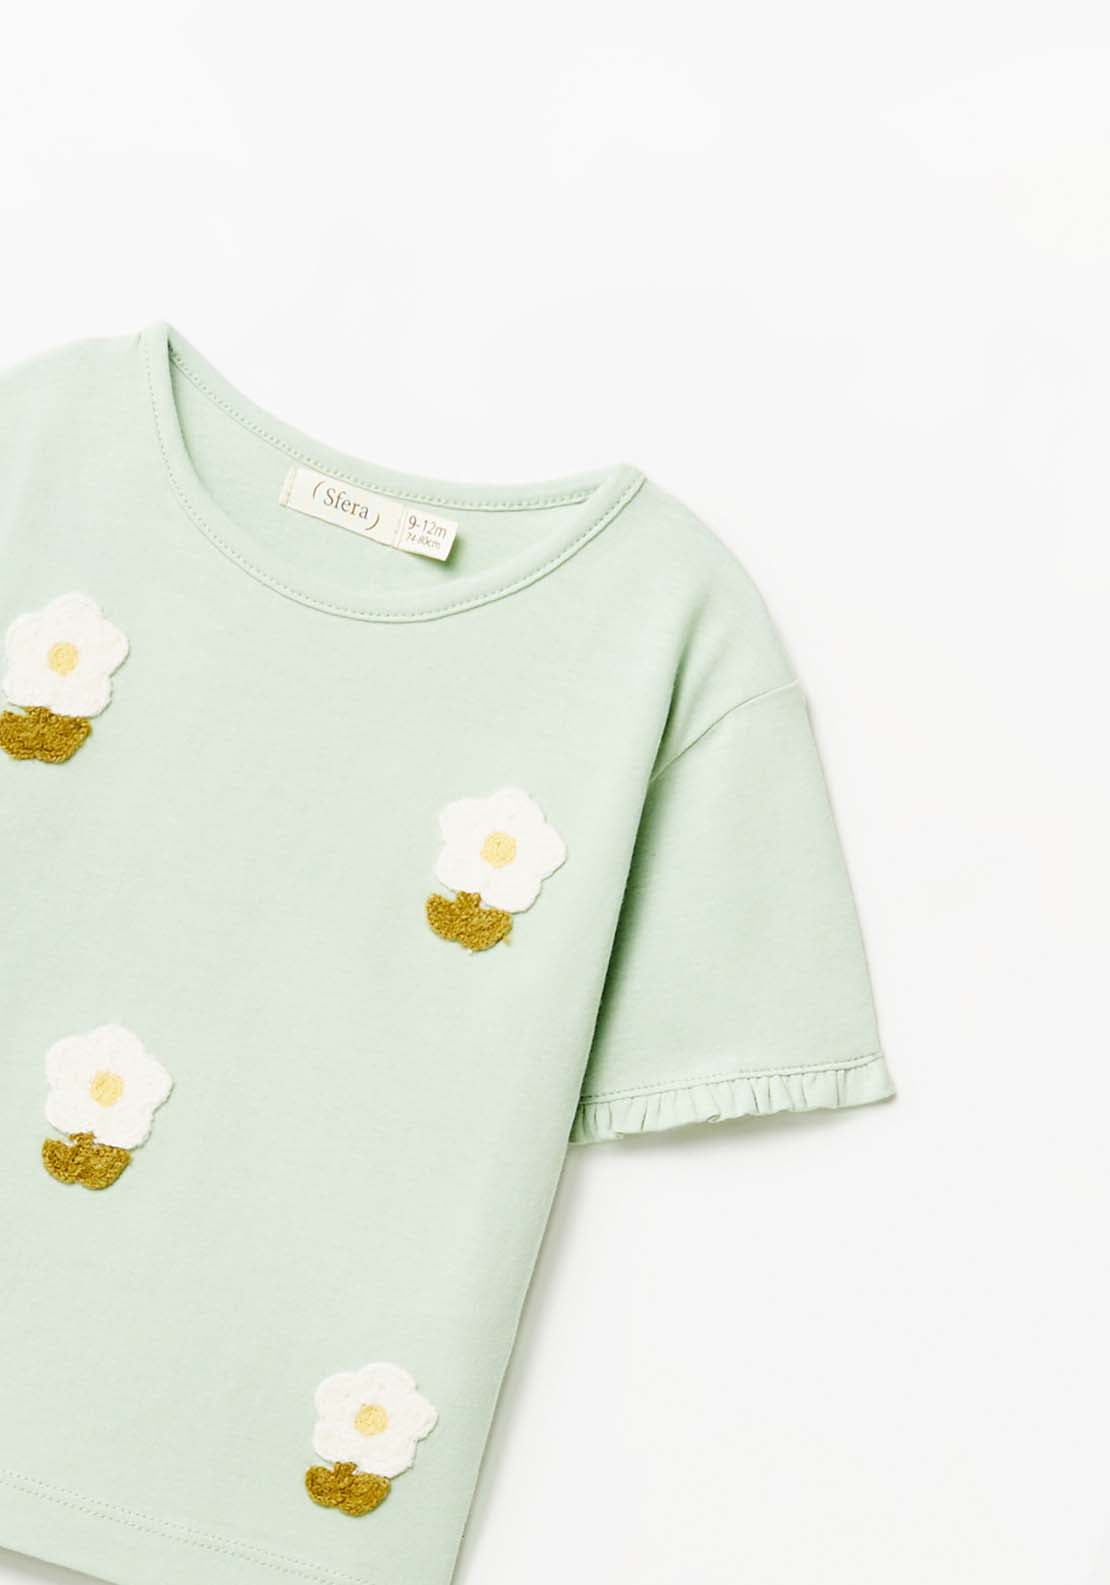 Sfera Crochet Flower Tshirt - Green 2 Shaws Department Stores